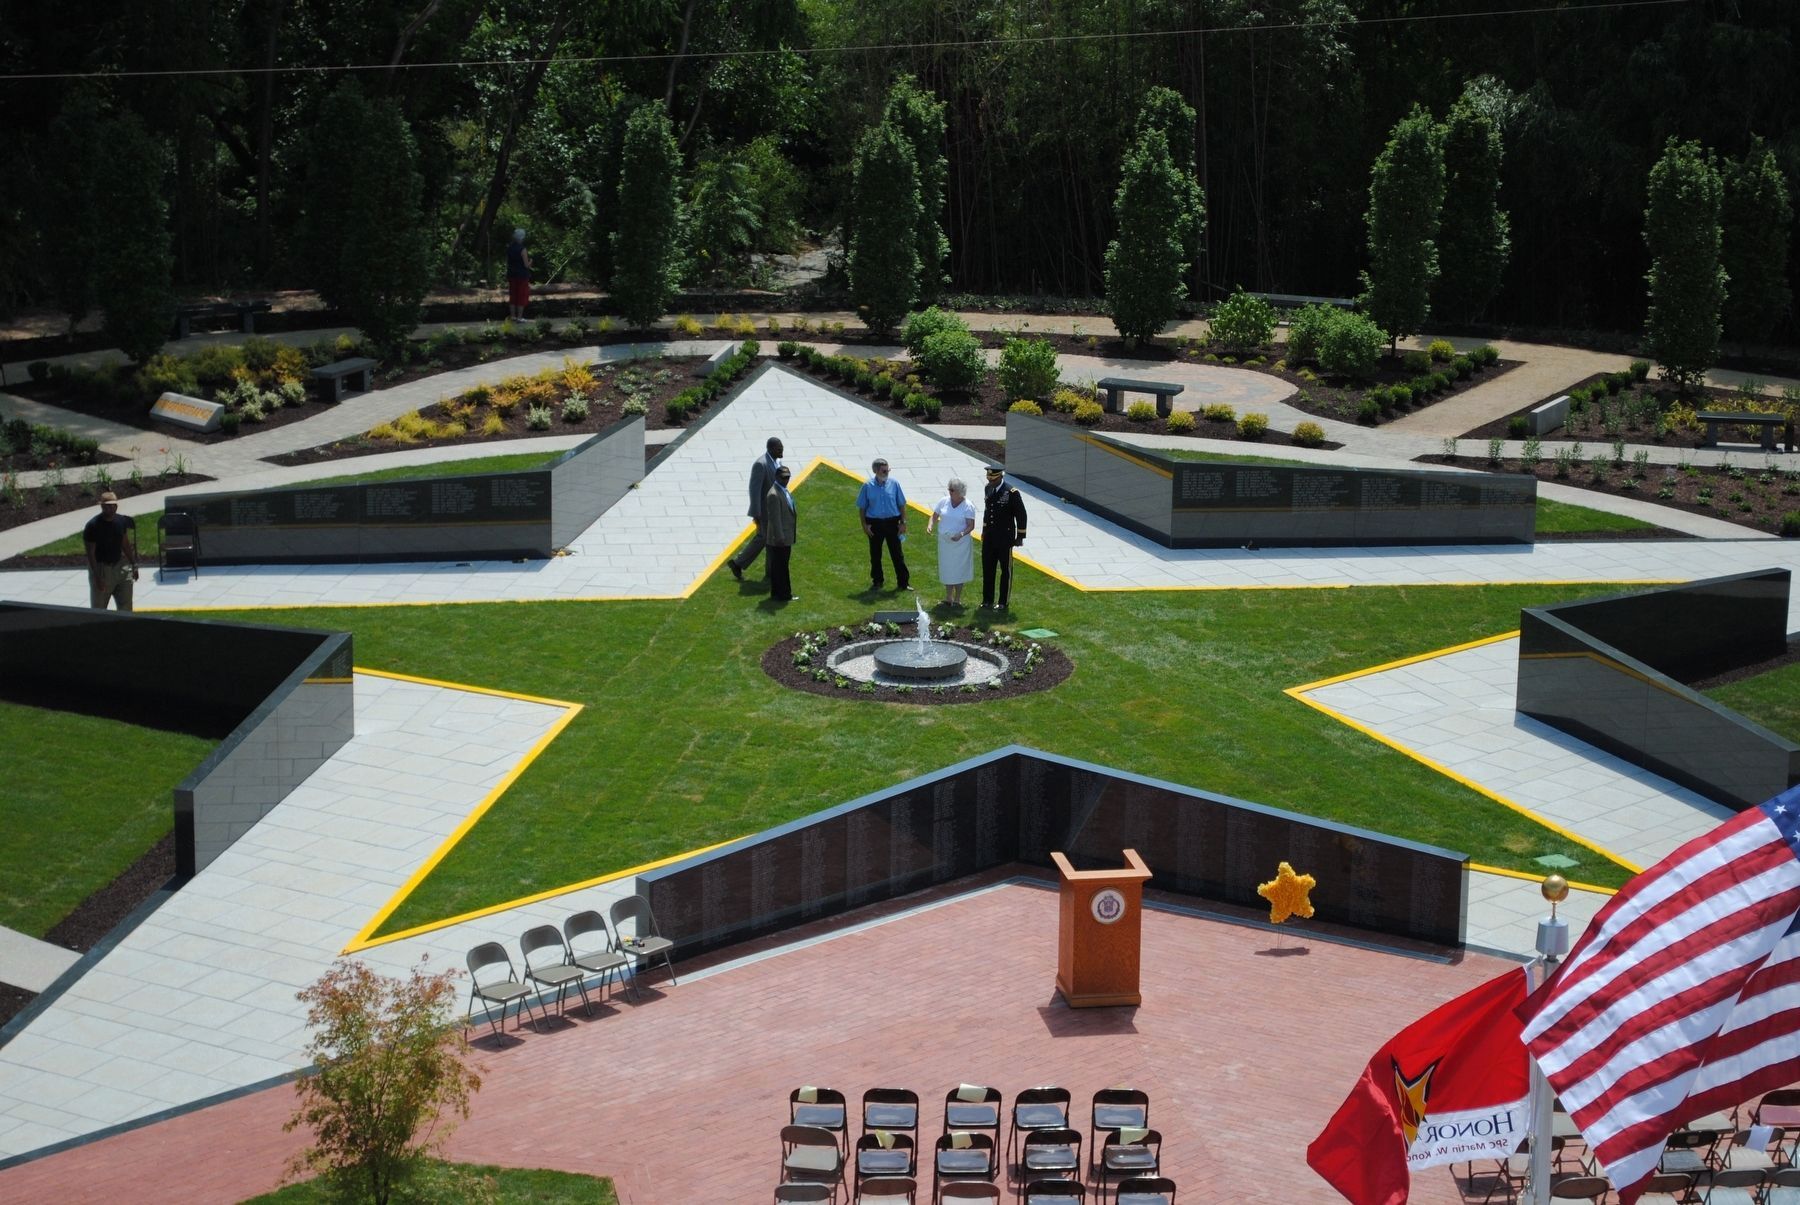 Veterans Memorial Gold Star Healing & Peace Garden Marker image. Click for full size.